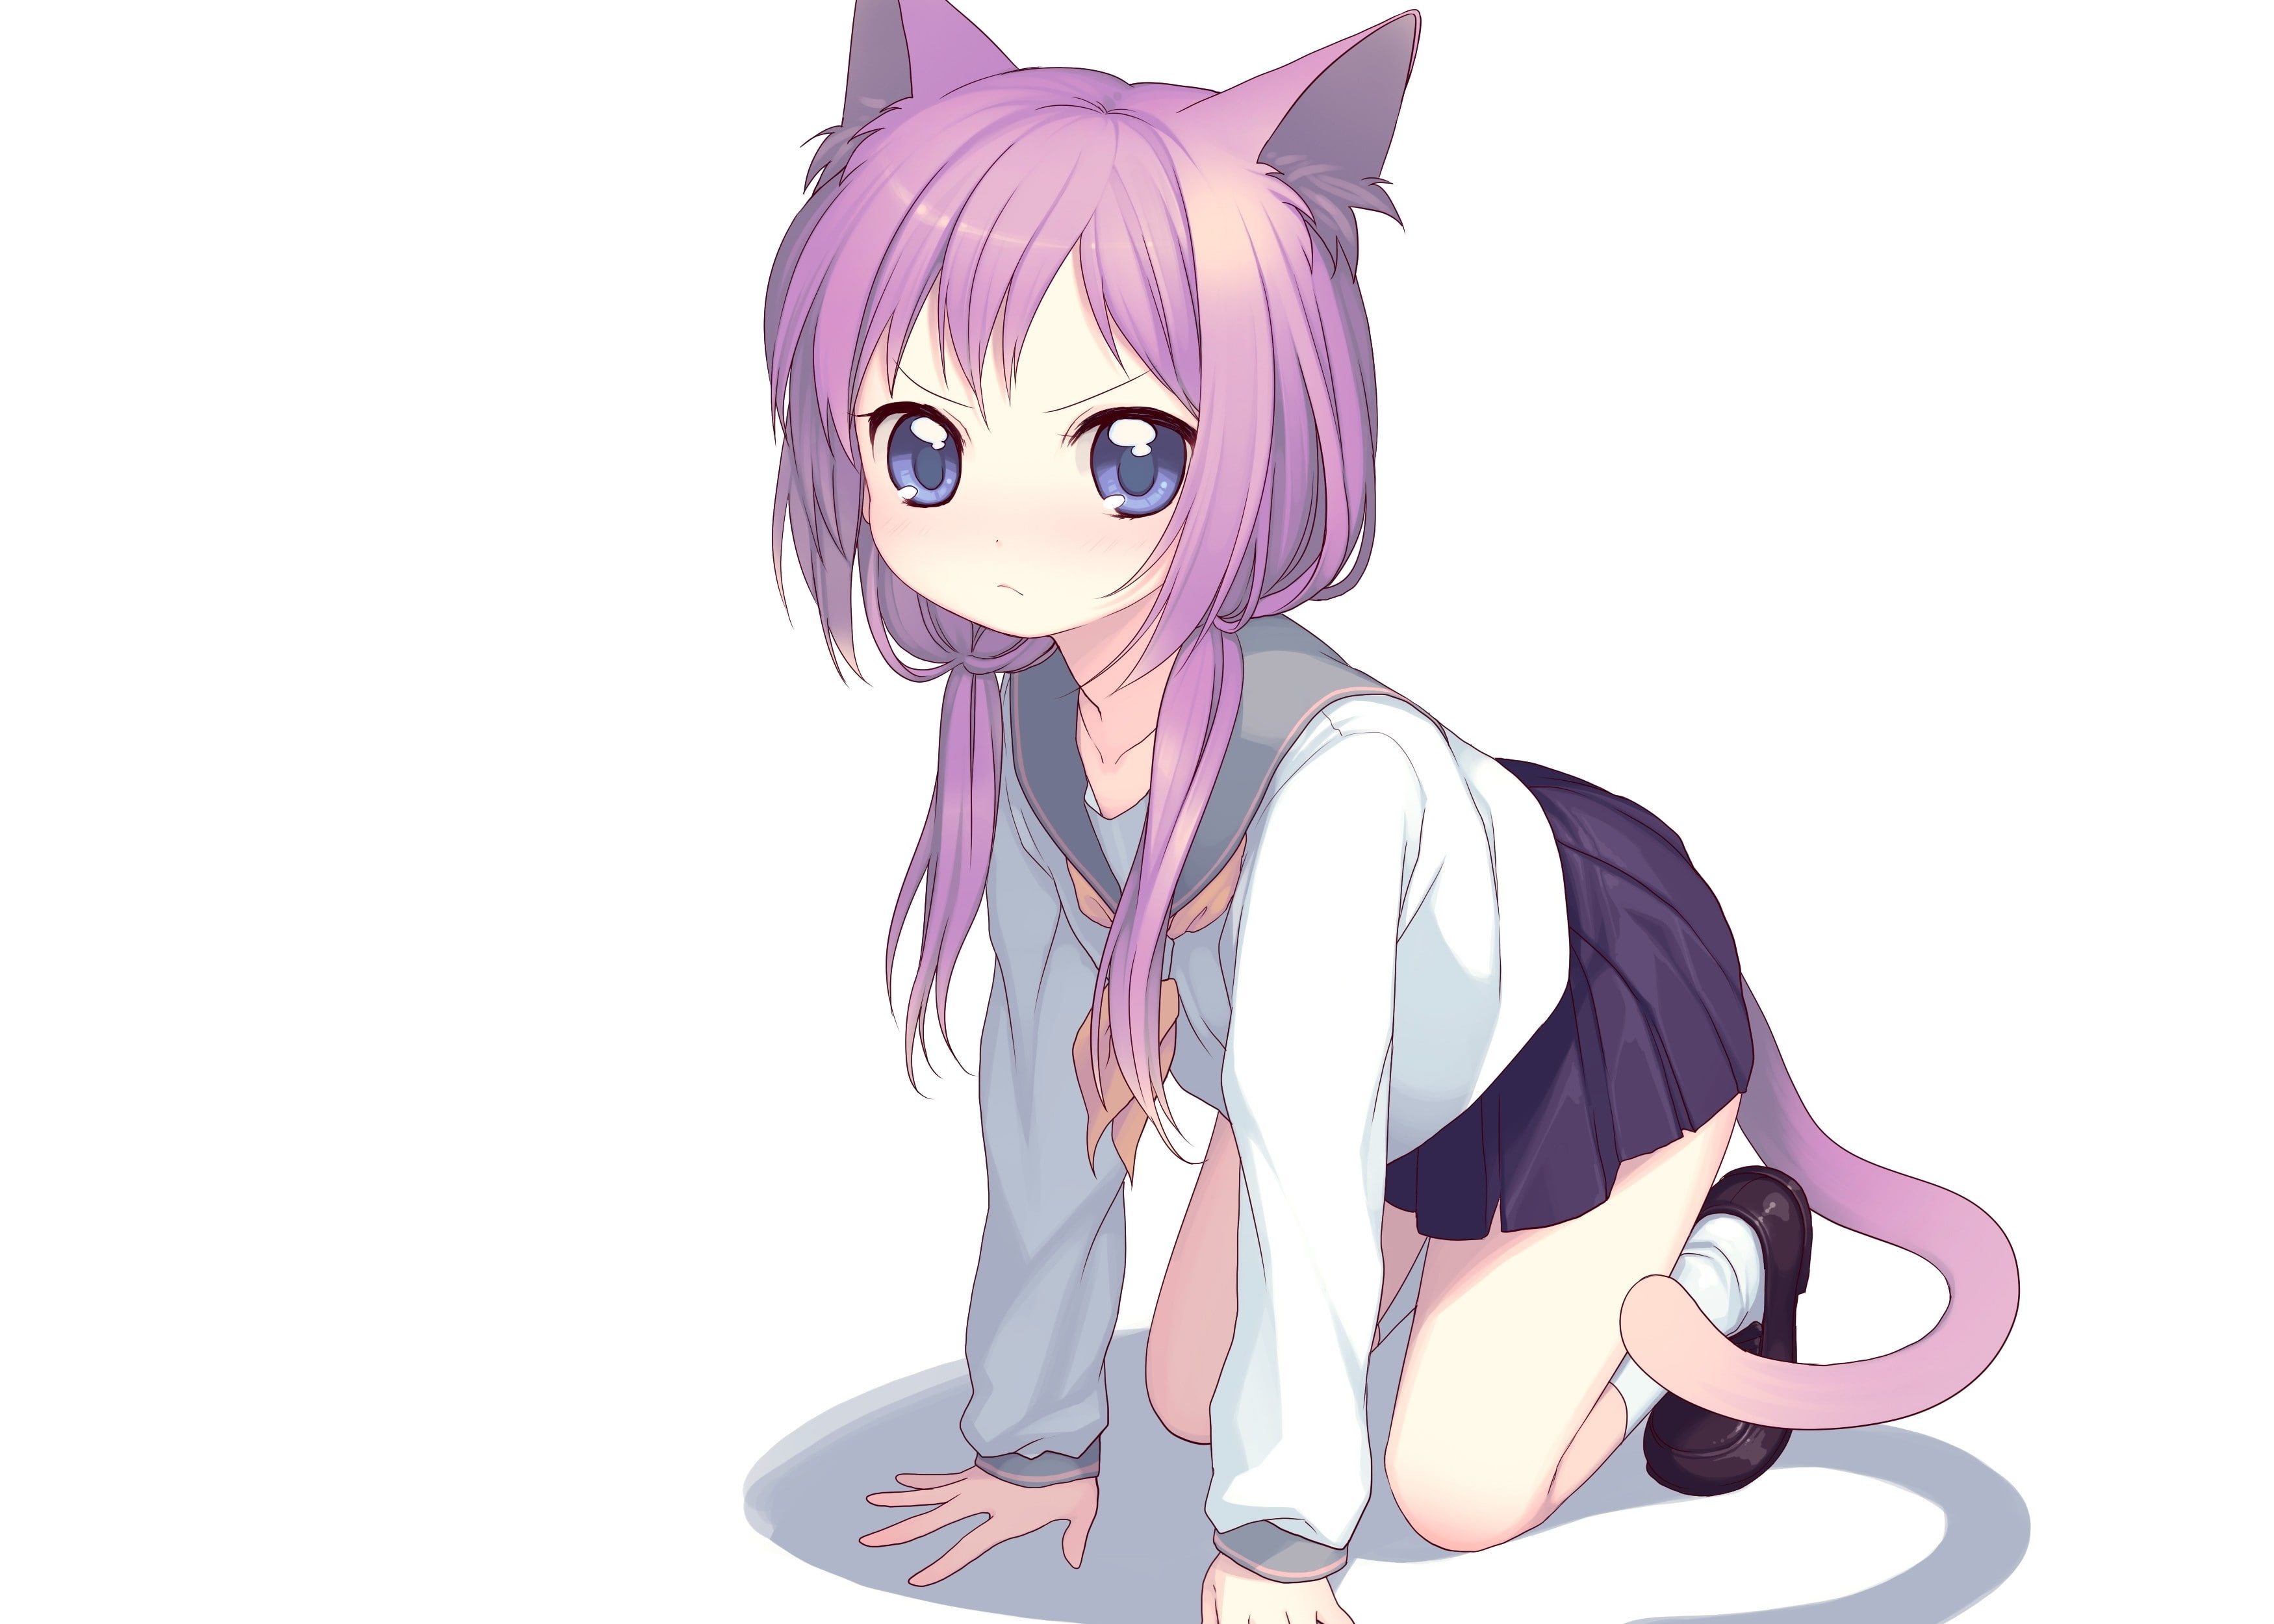 Cat Girls, Anime Girls, Nekomimi, Big Eyes, Look, Anime, pink haired woman anime character